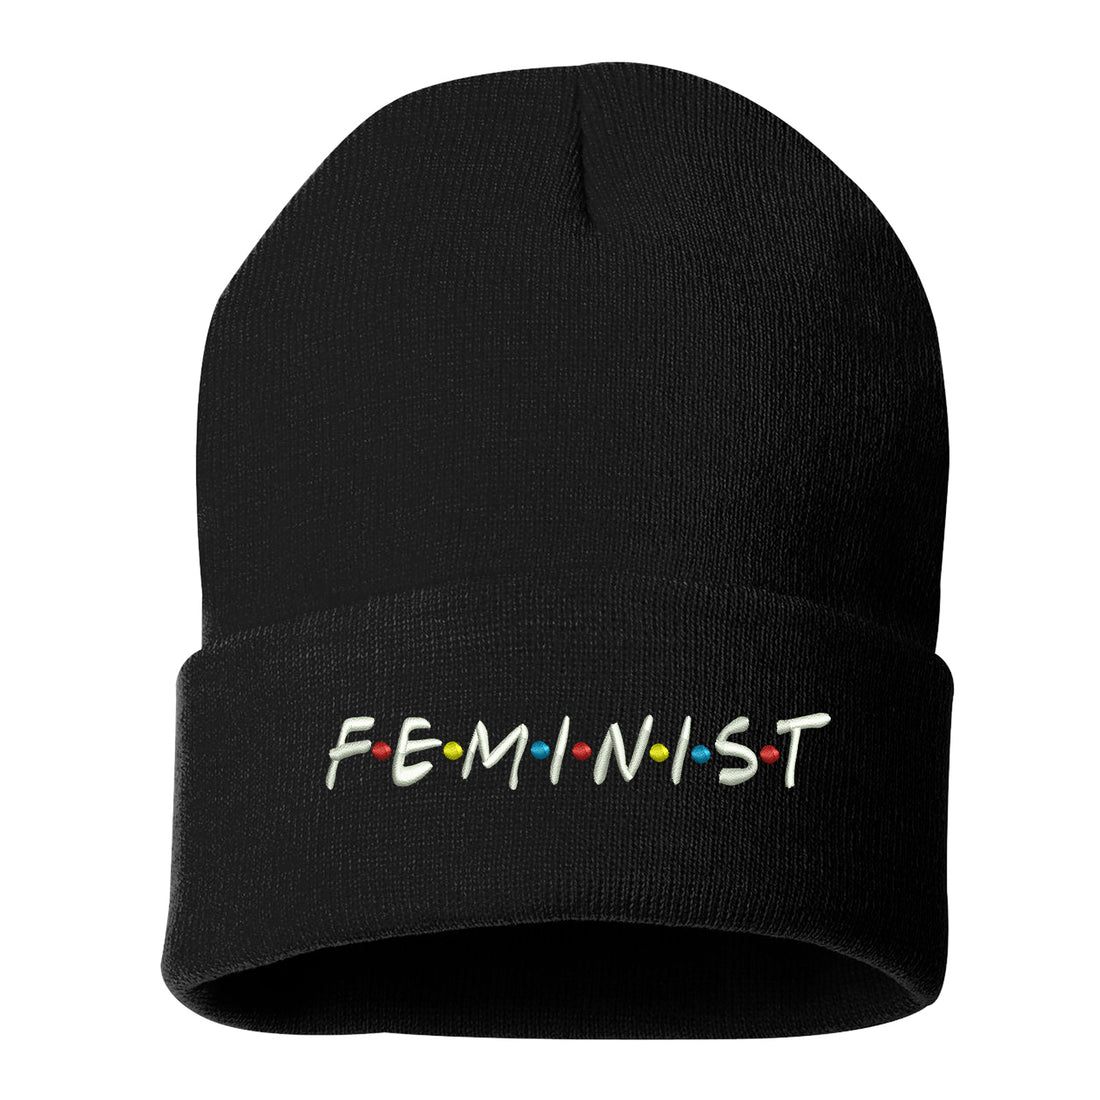 Feminist Cuffed Beanie Hat - Prfcto Lifestyle